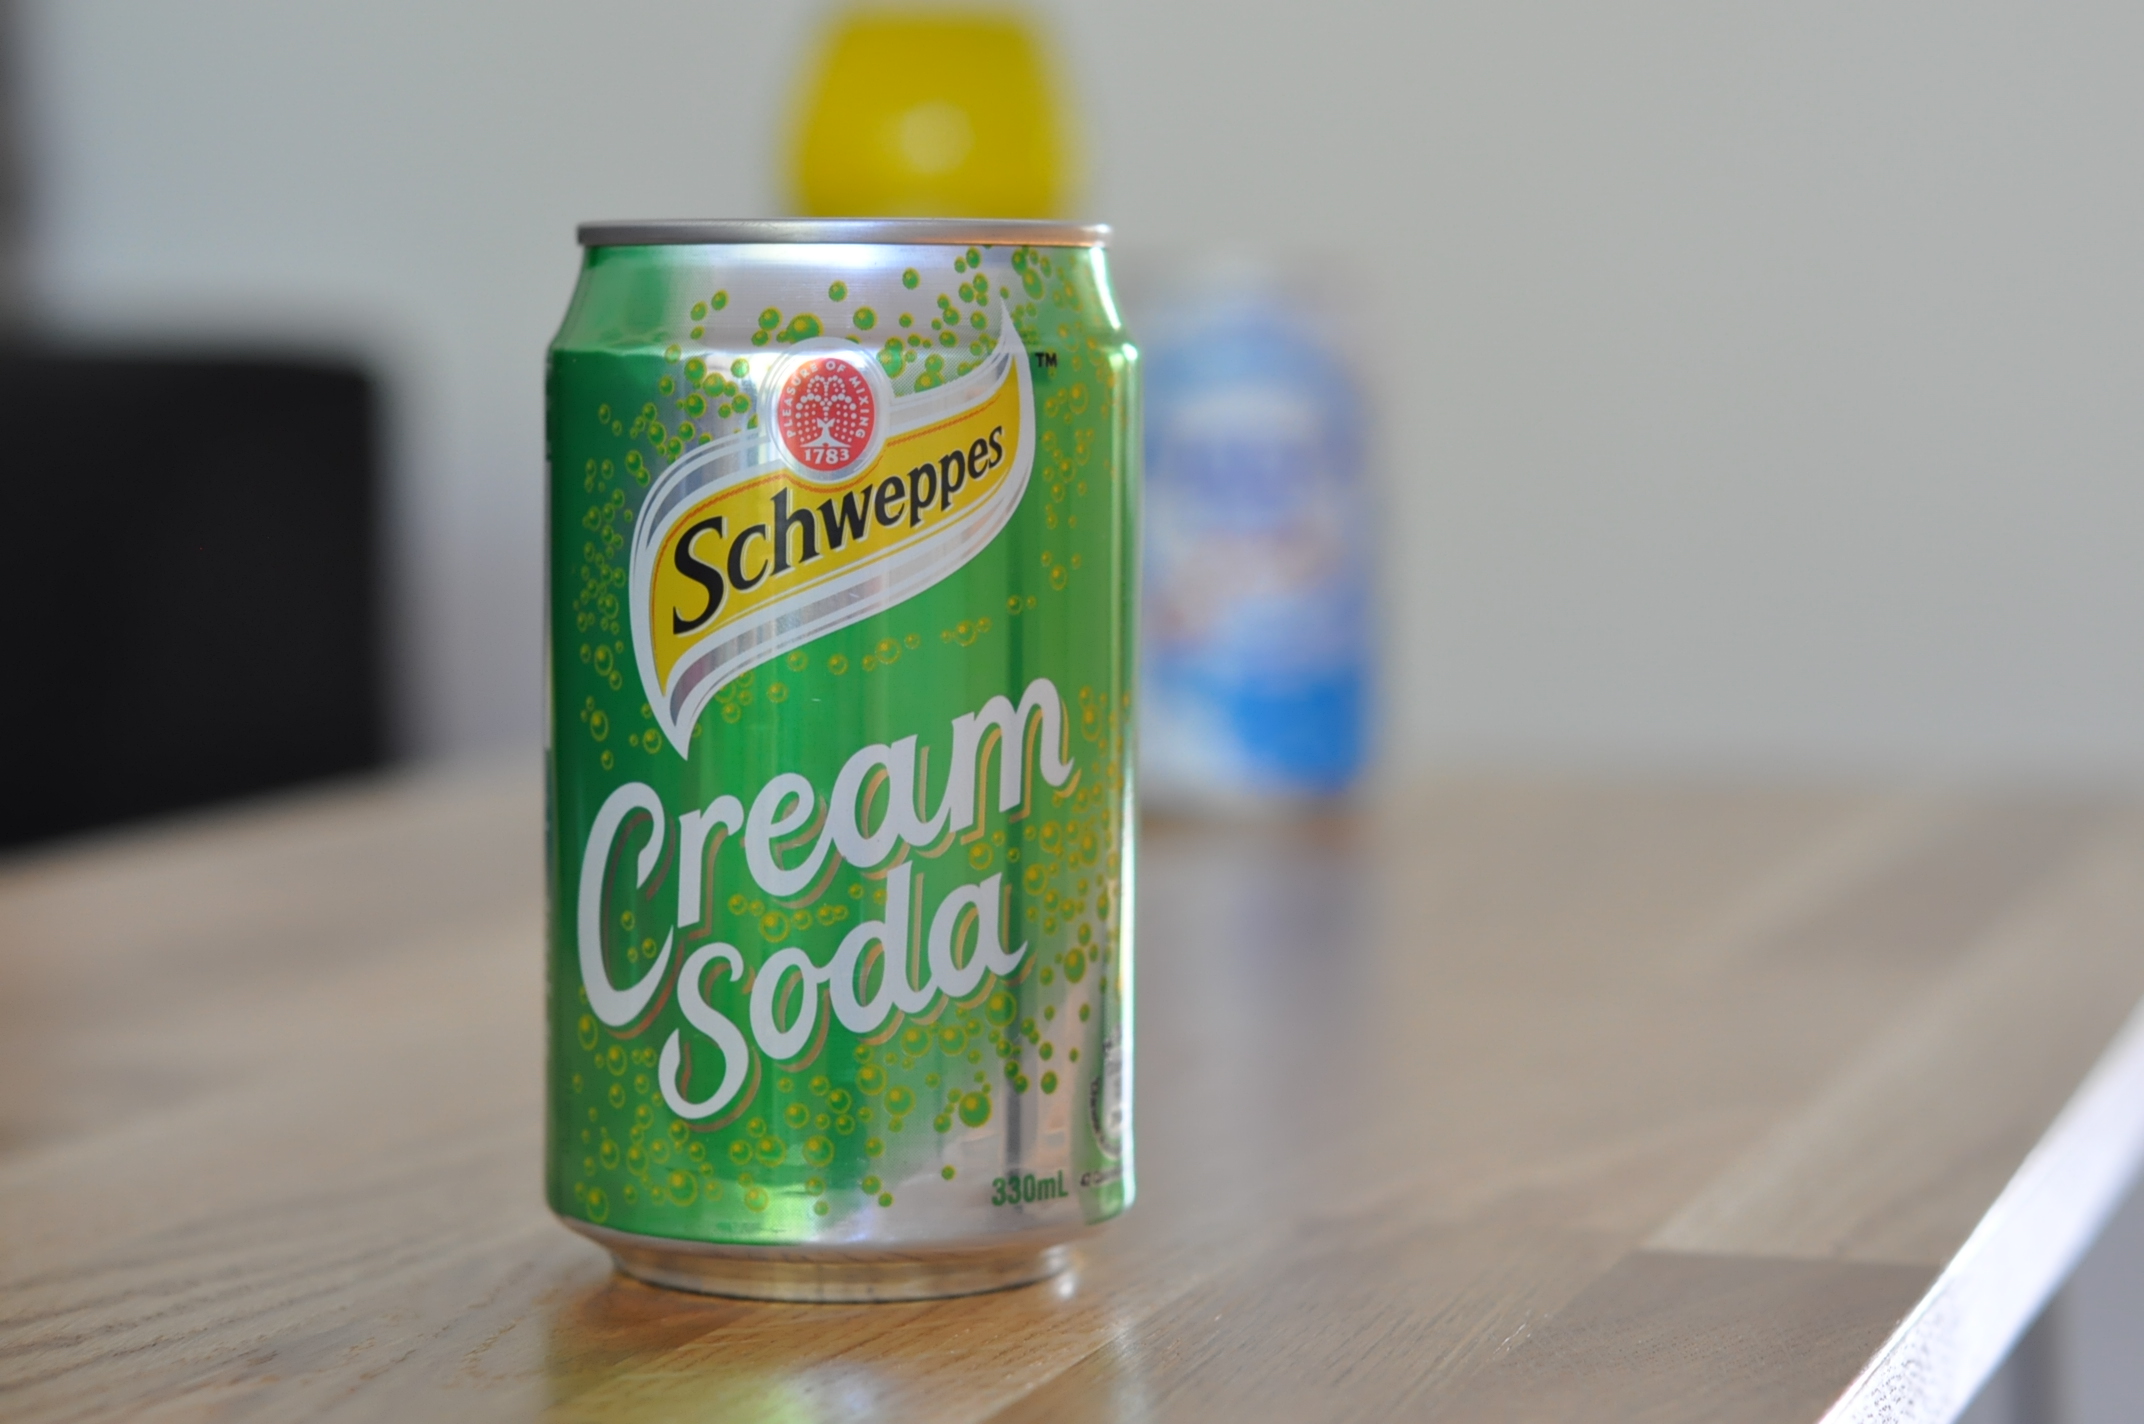 Schweppes Cream Soda